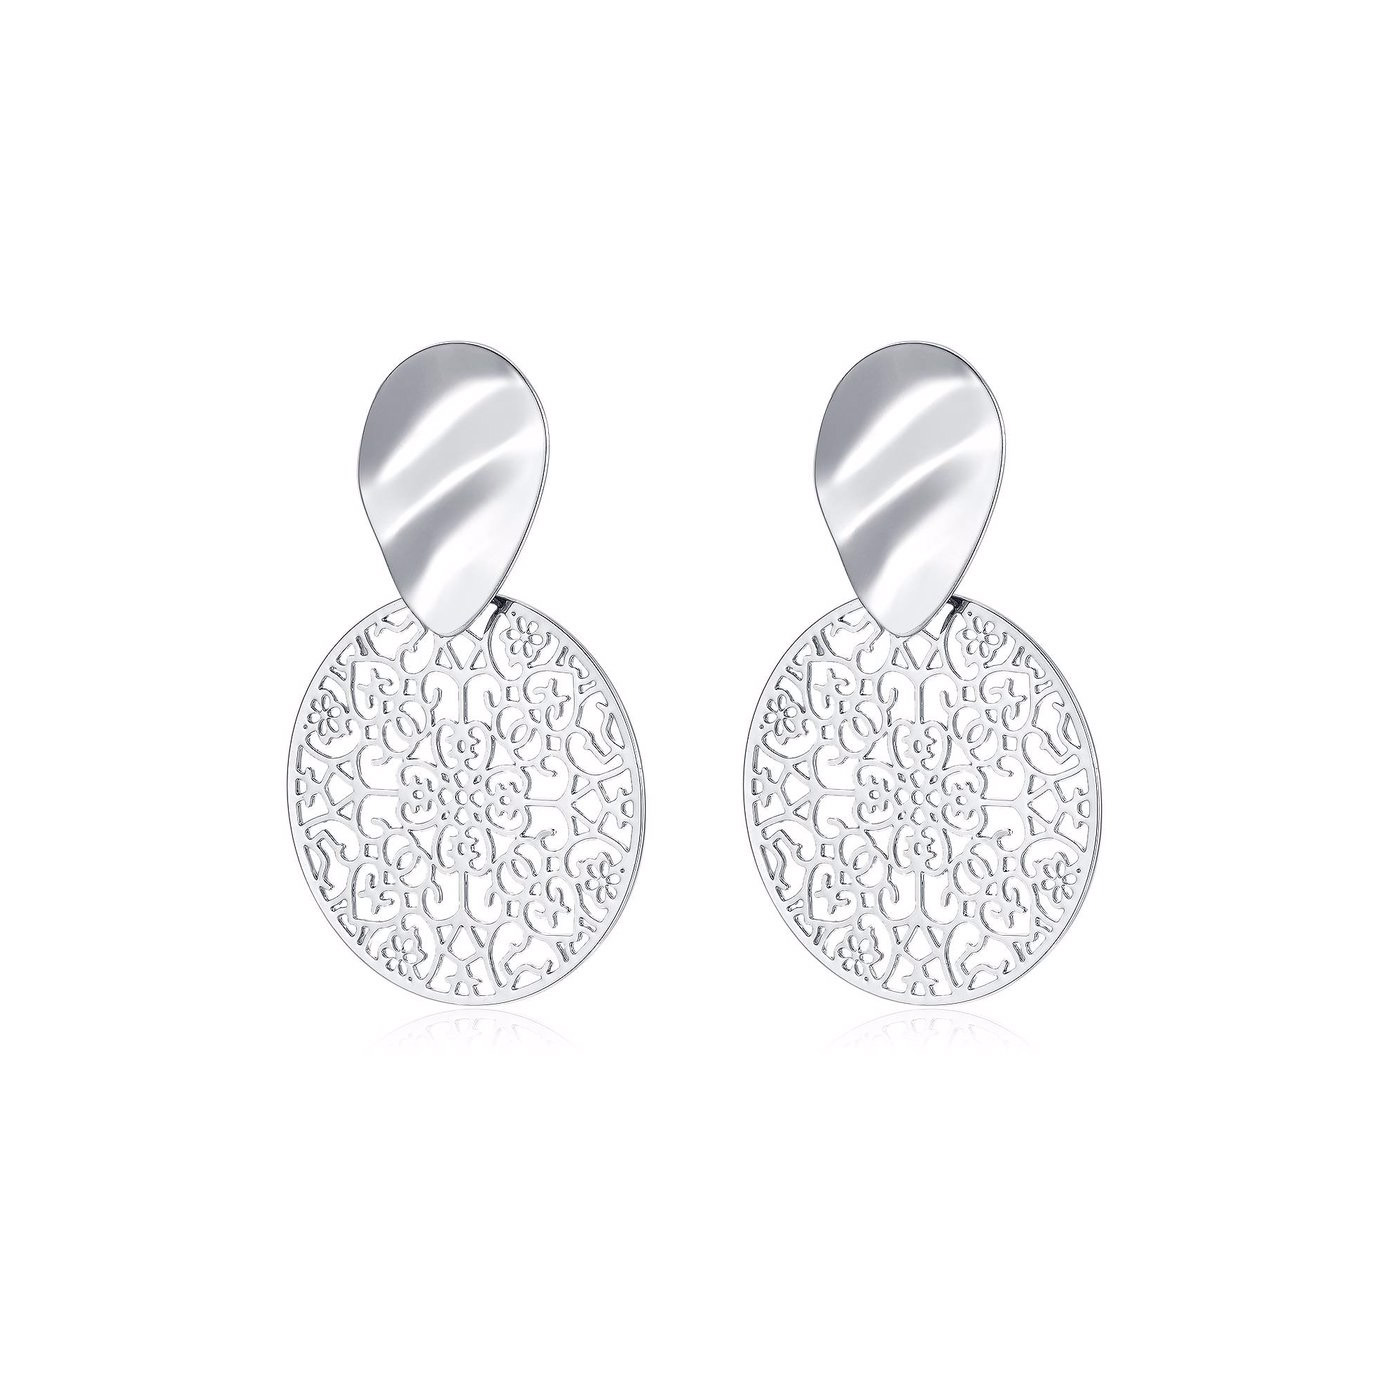 Custom Silver Earring Jewelry Manufacturer in China OEM/ODM Jewelry